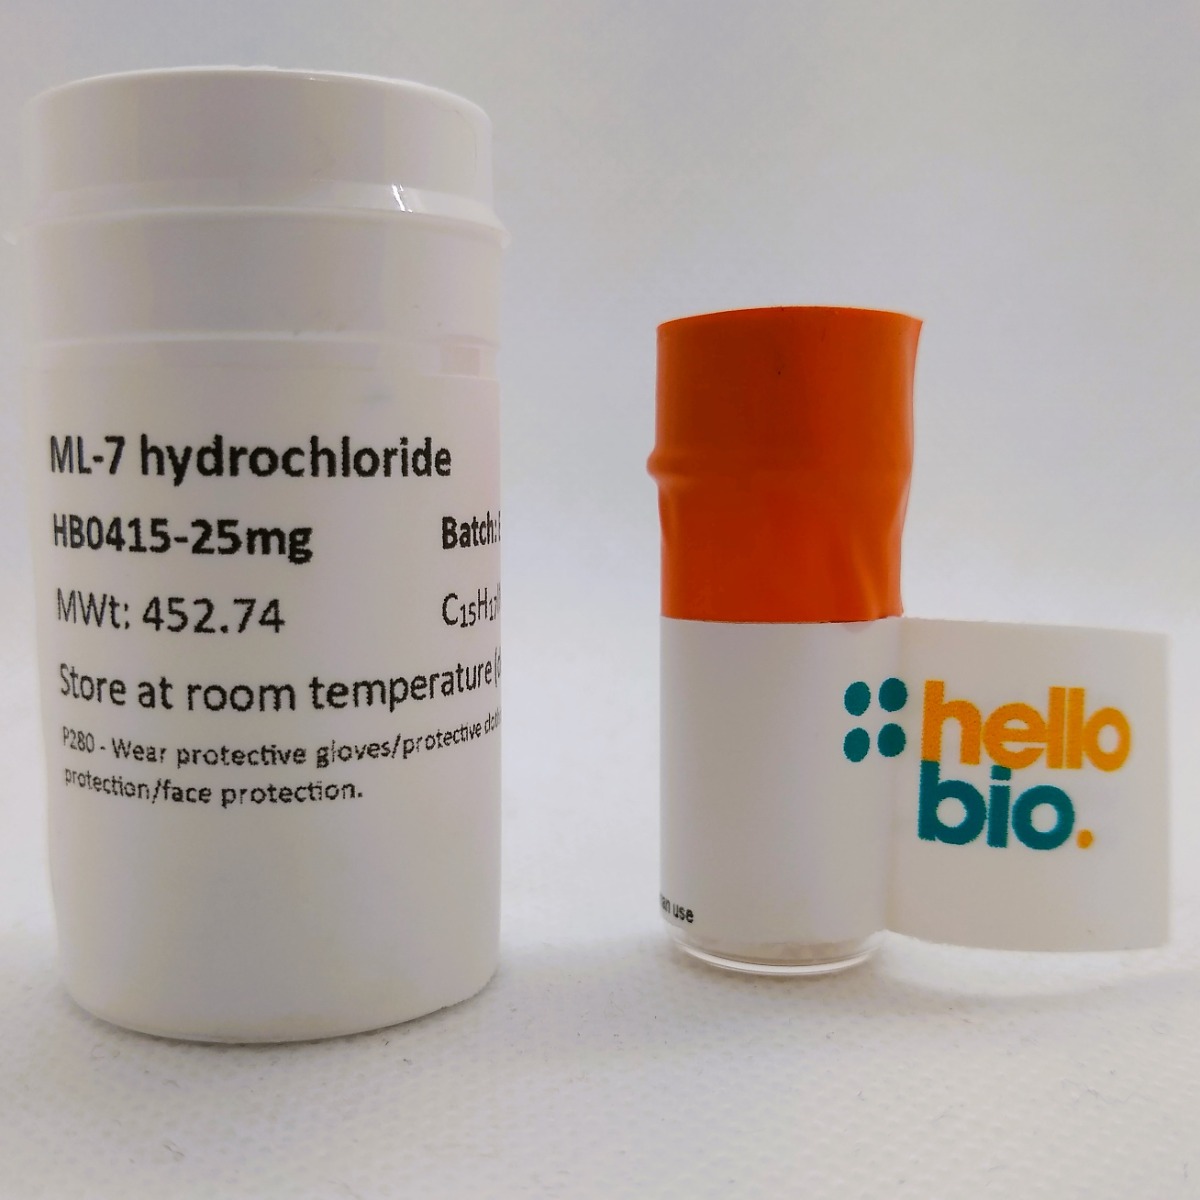 ML-7 hydrochloride product vial image | Hello Bio